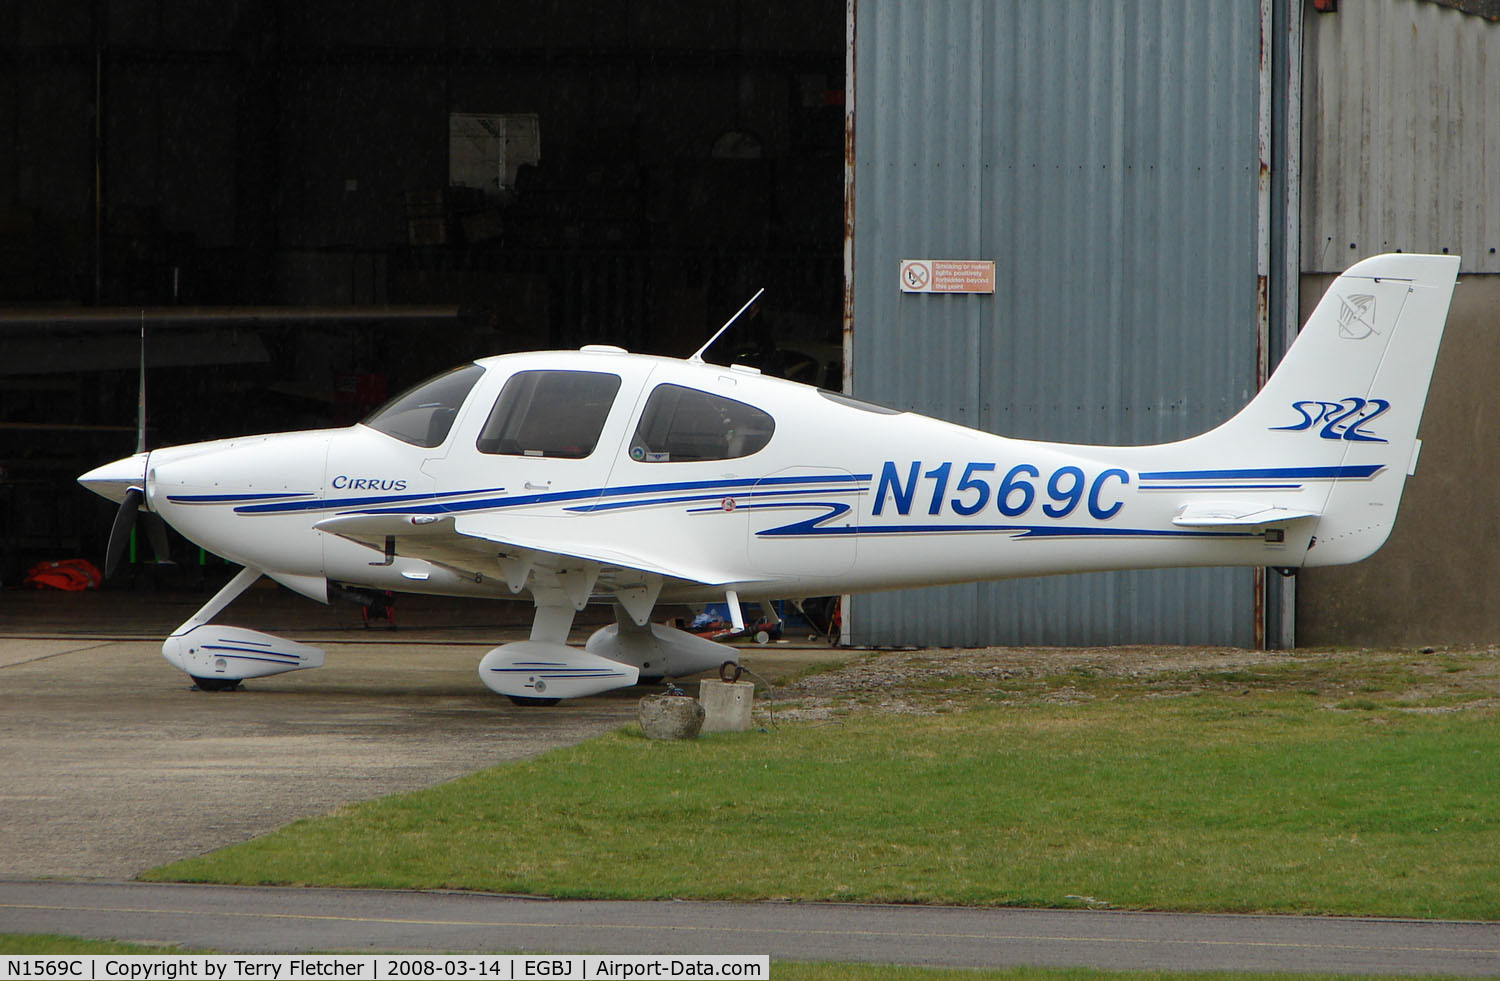 N1569C, 2003 Cirrus SR22 C/N 0581, Cirrus SR22 at Gloucestershire Airport